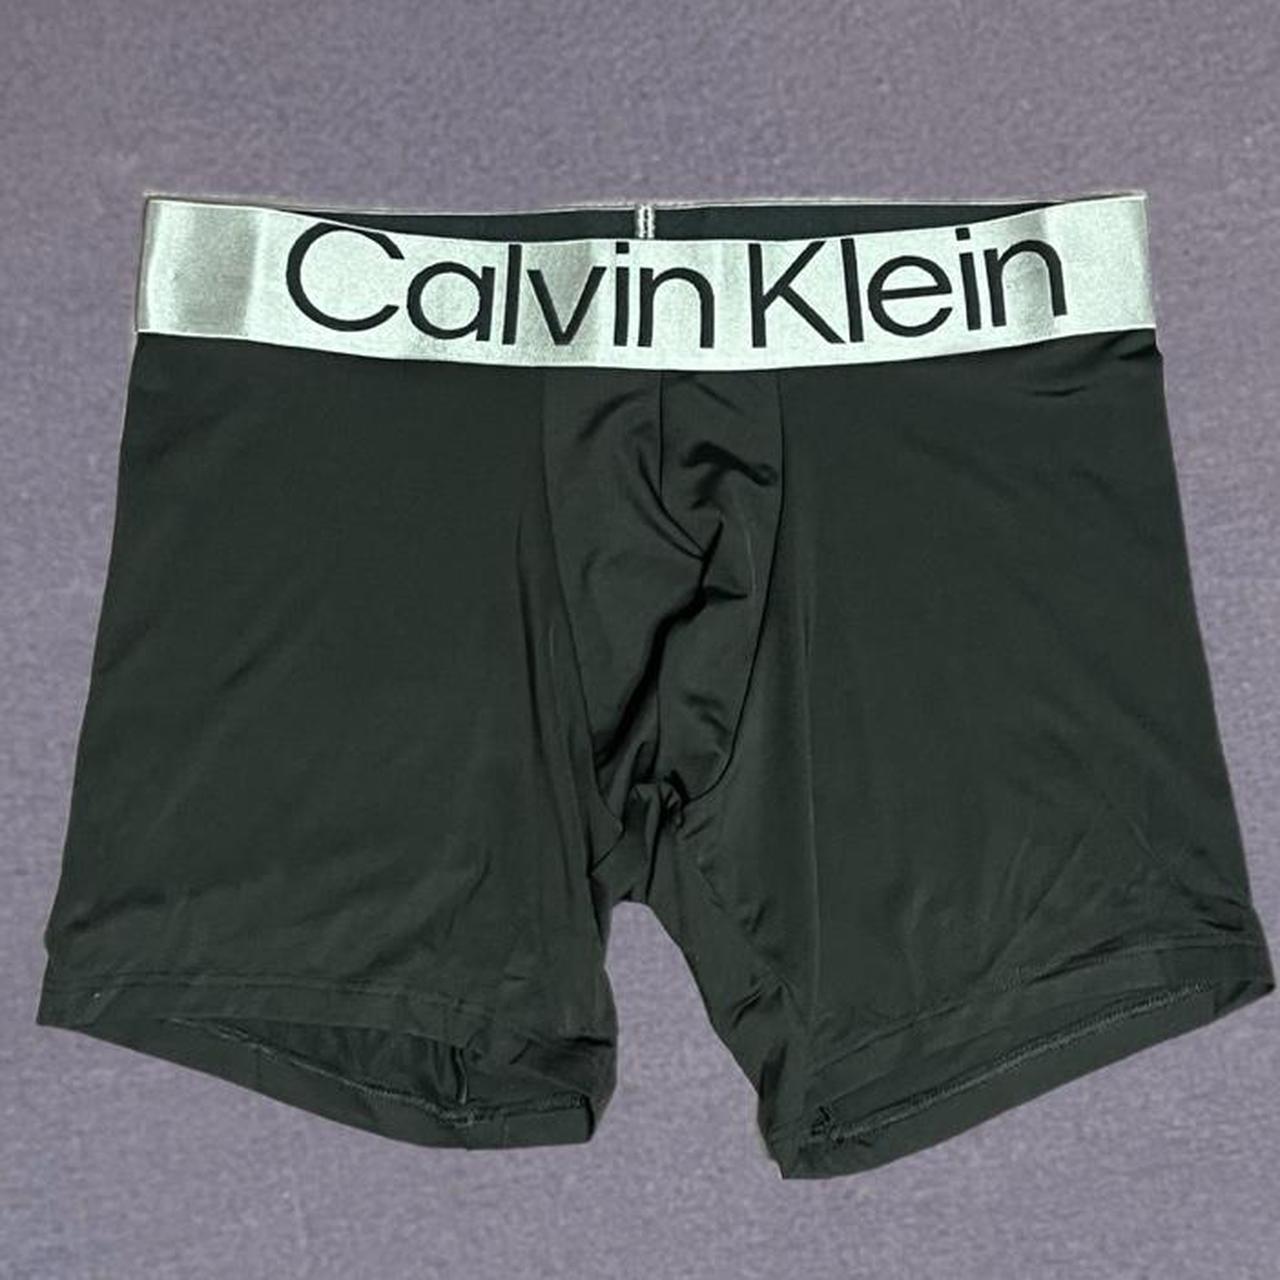 Calvin klein-boxers - Depop